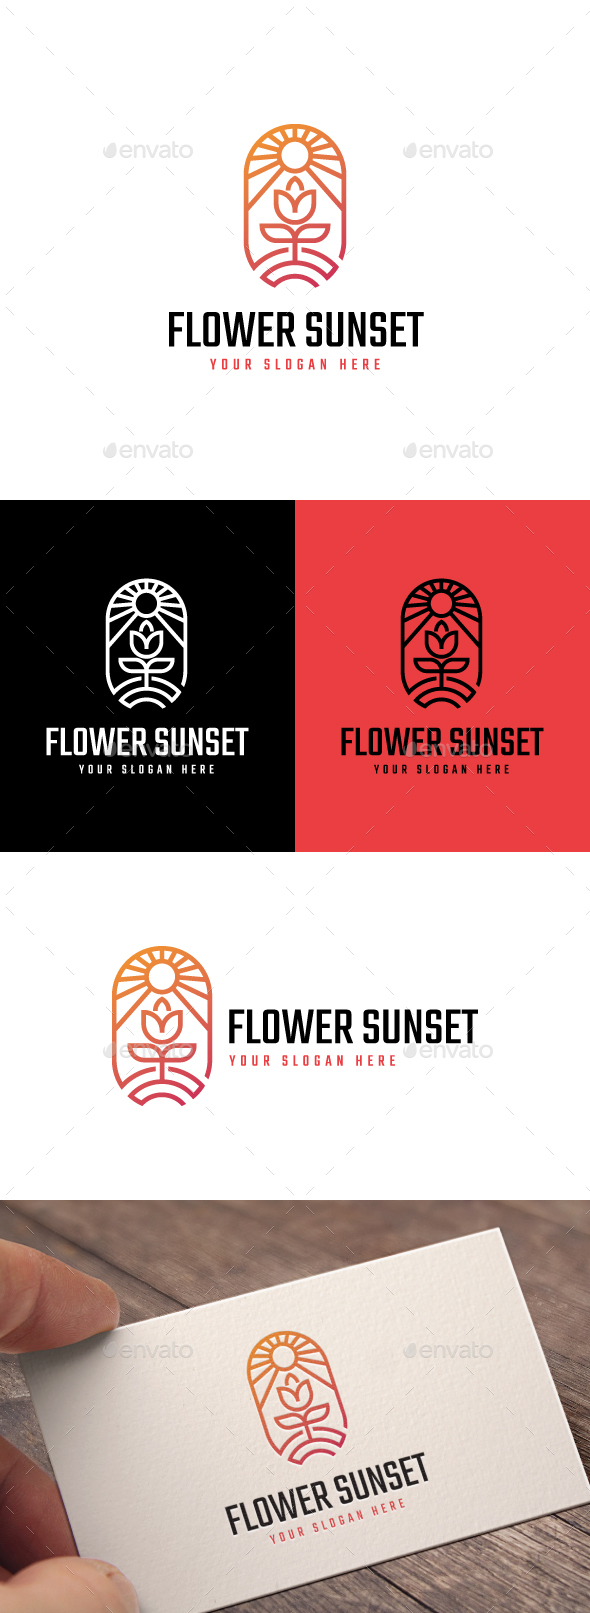 [DOWNLOAD]Flower Sunset Logo